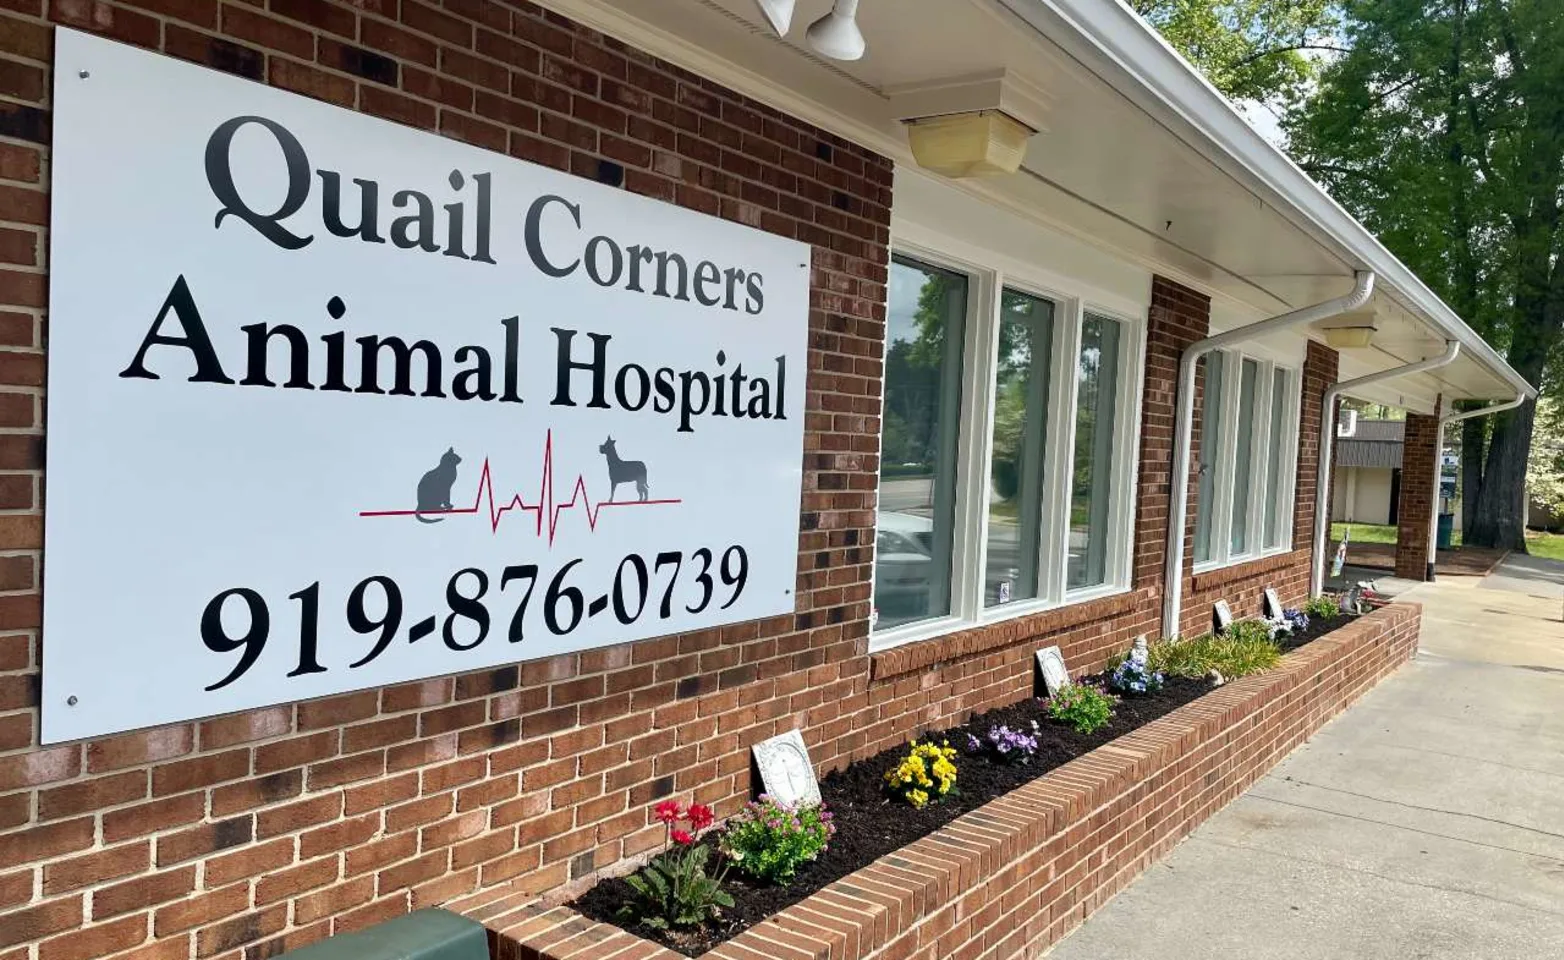 Quail Corners Animal Hospital Front